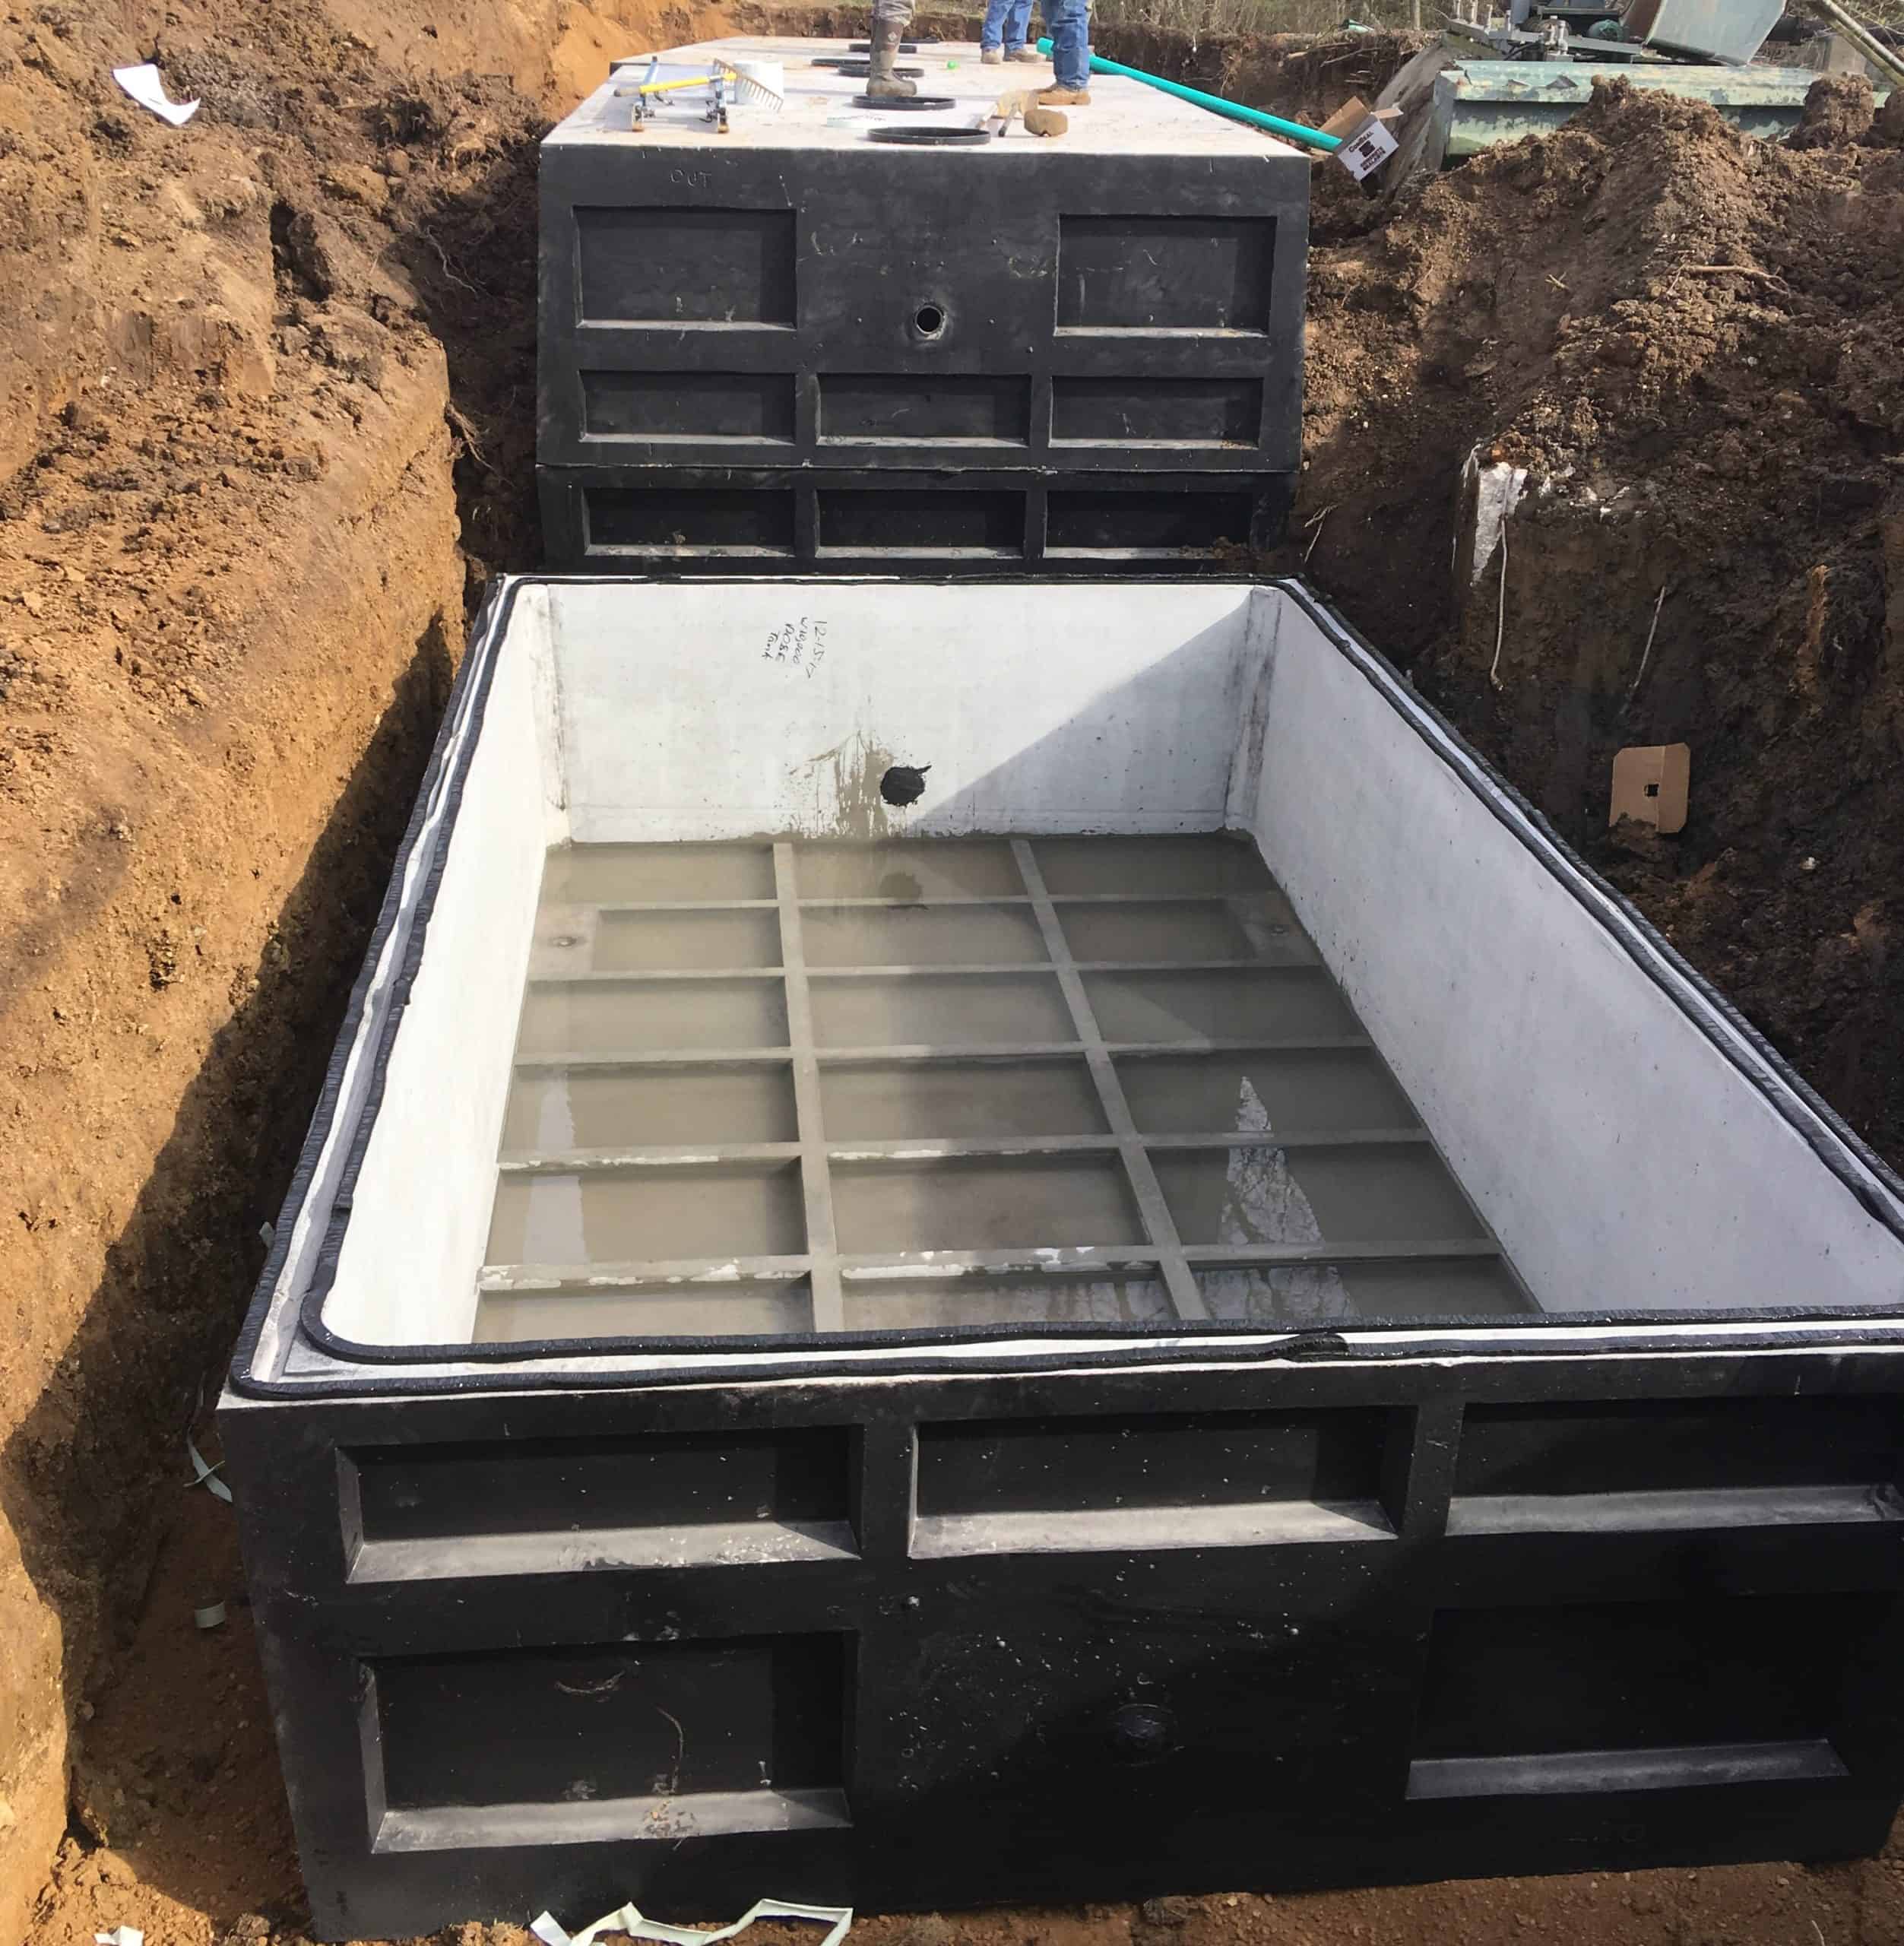 Tievoli Hills Precast Concrete Wastewater Treatment Tanks by Wieser Concrete